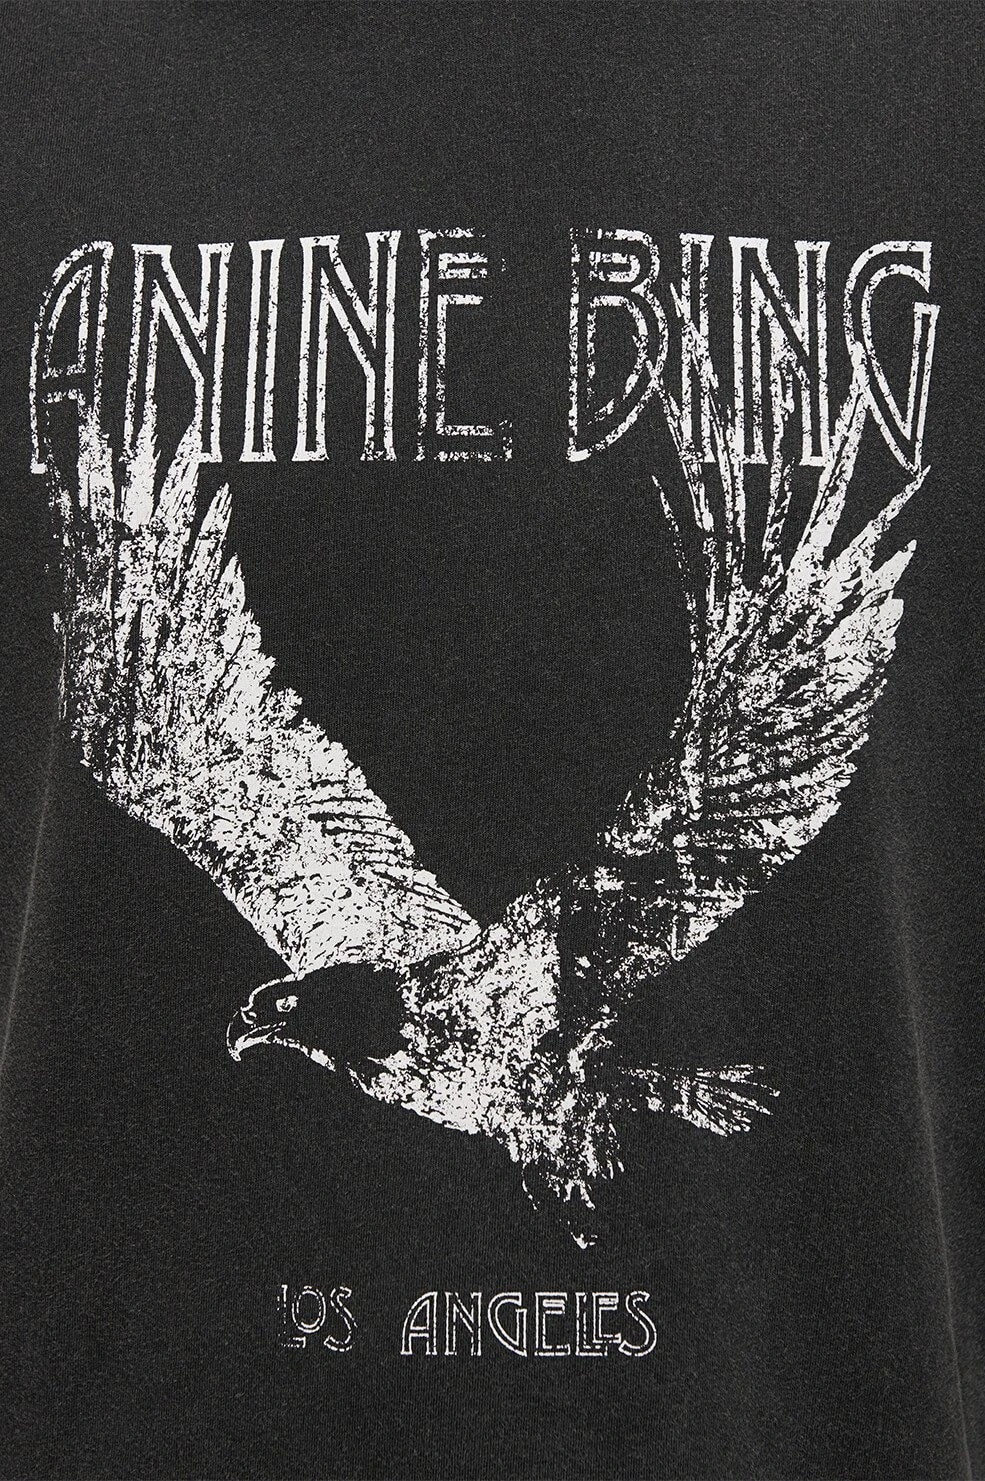 Anine Bing - Lili Eagle Tee in Washed Black